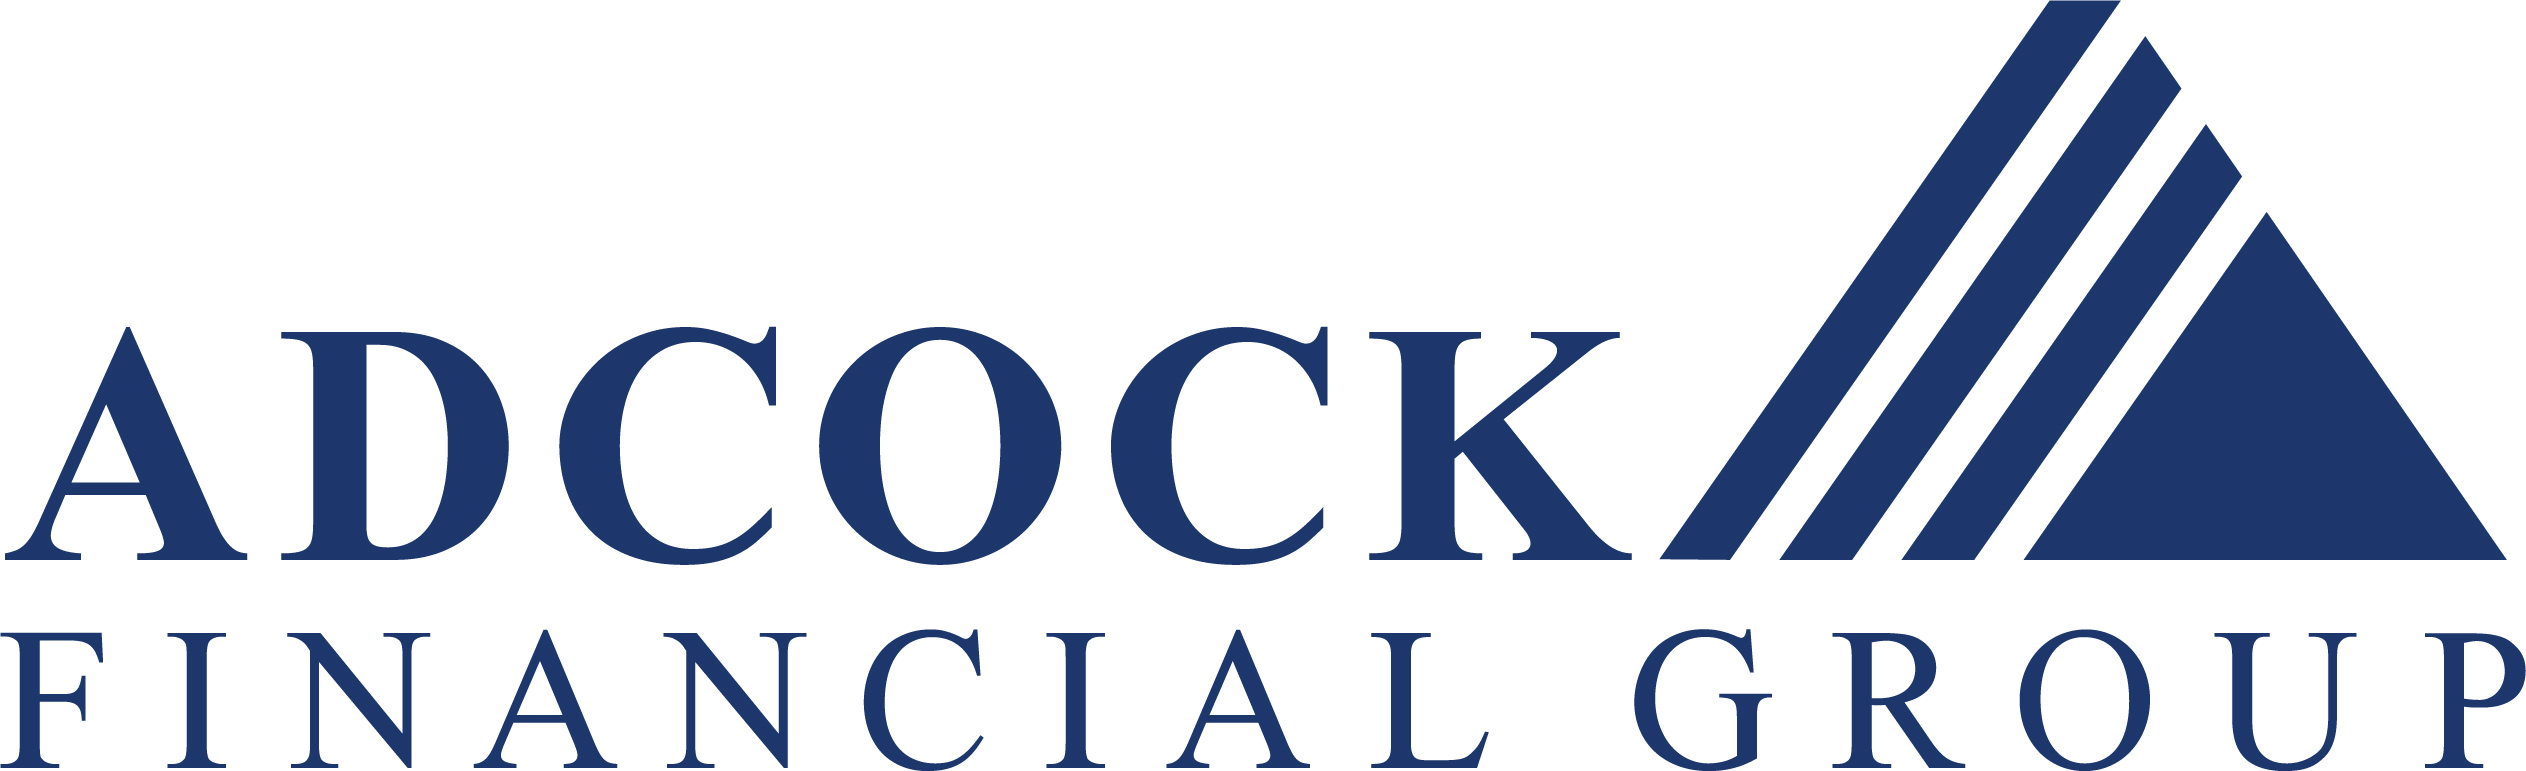 Adcock Financial Group